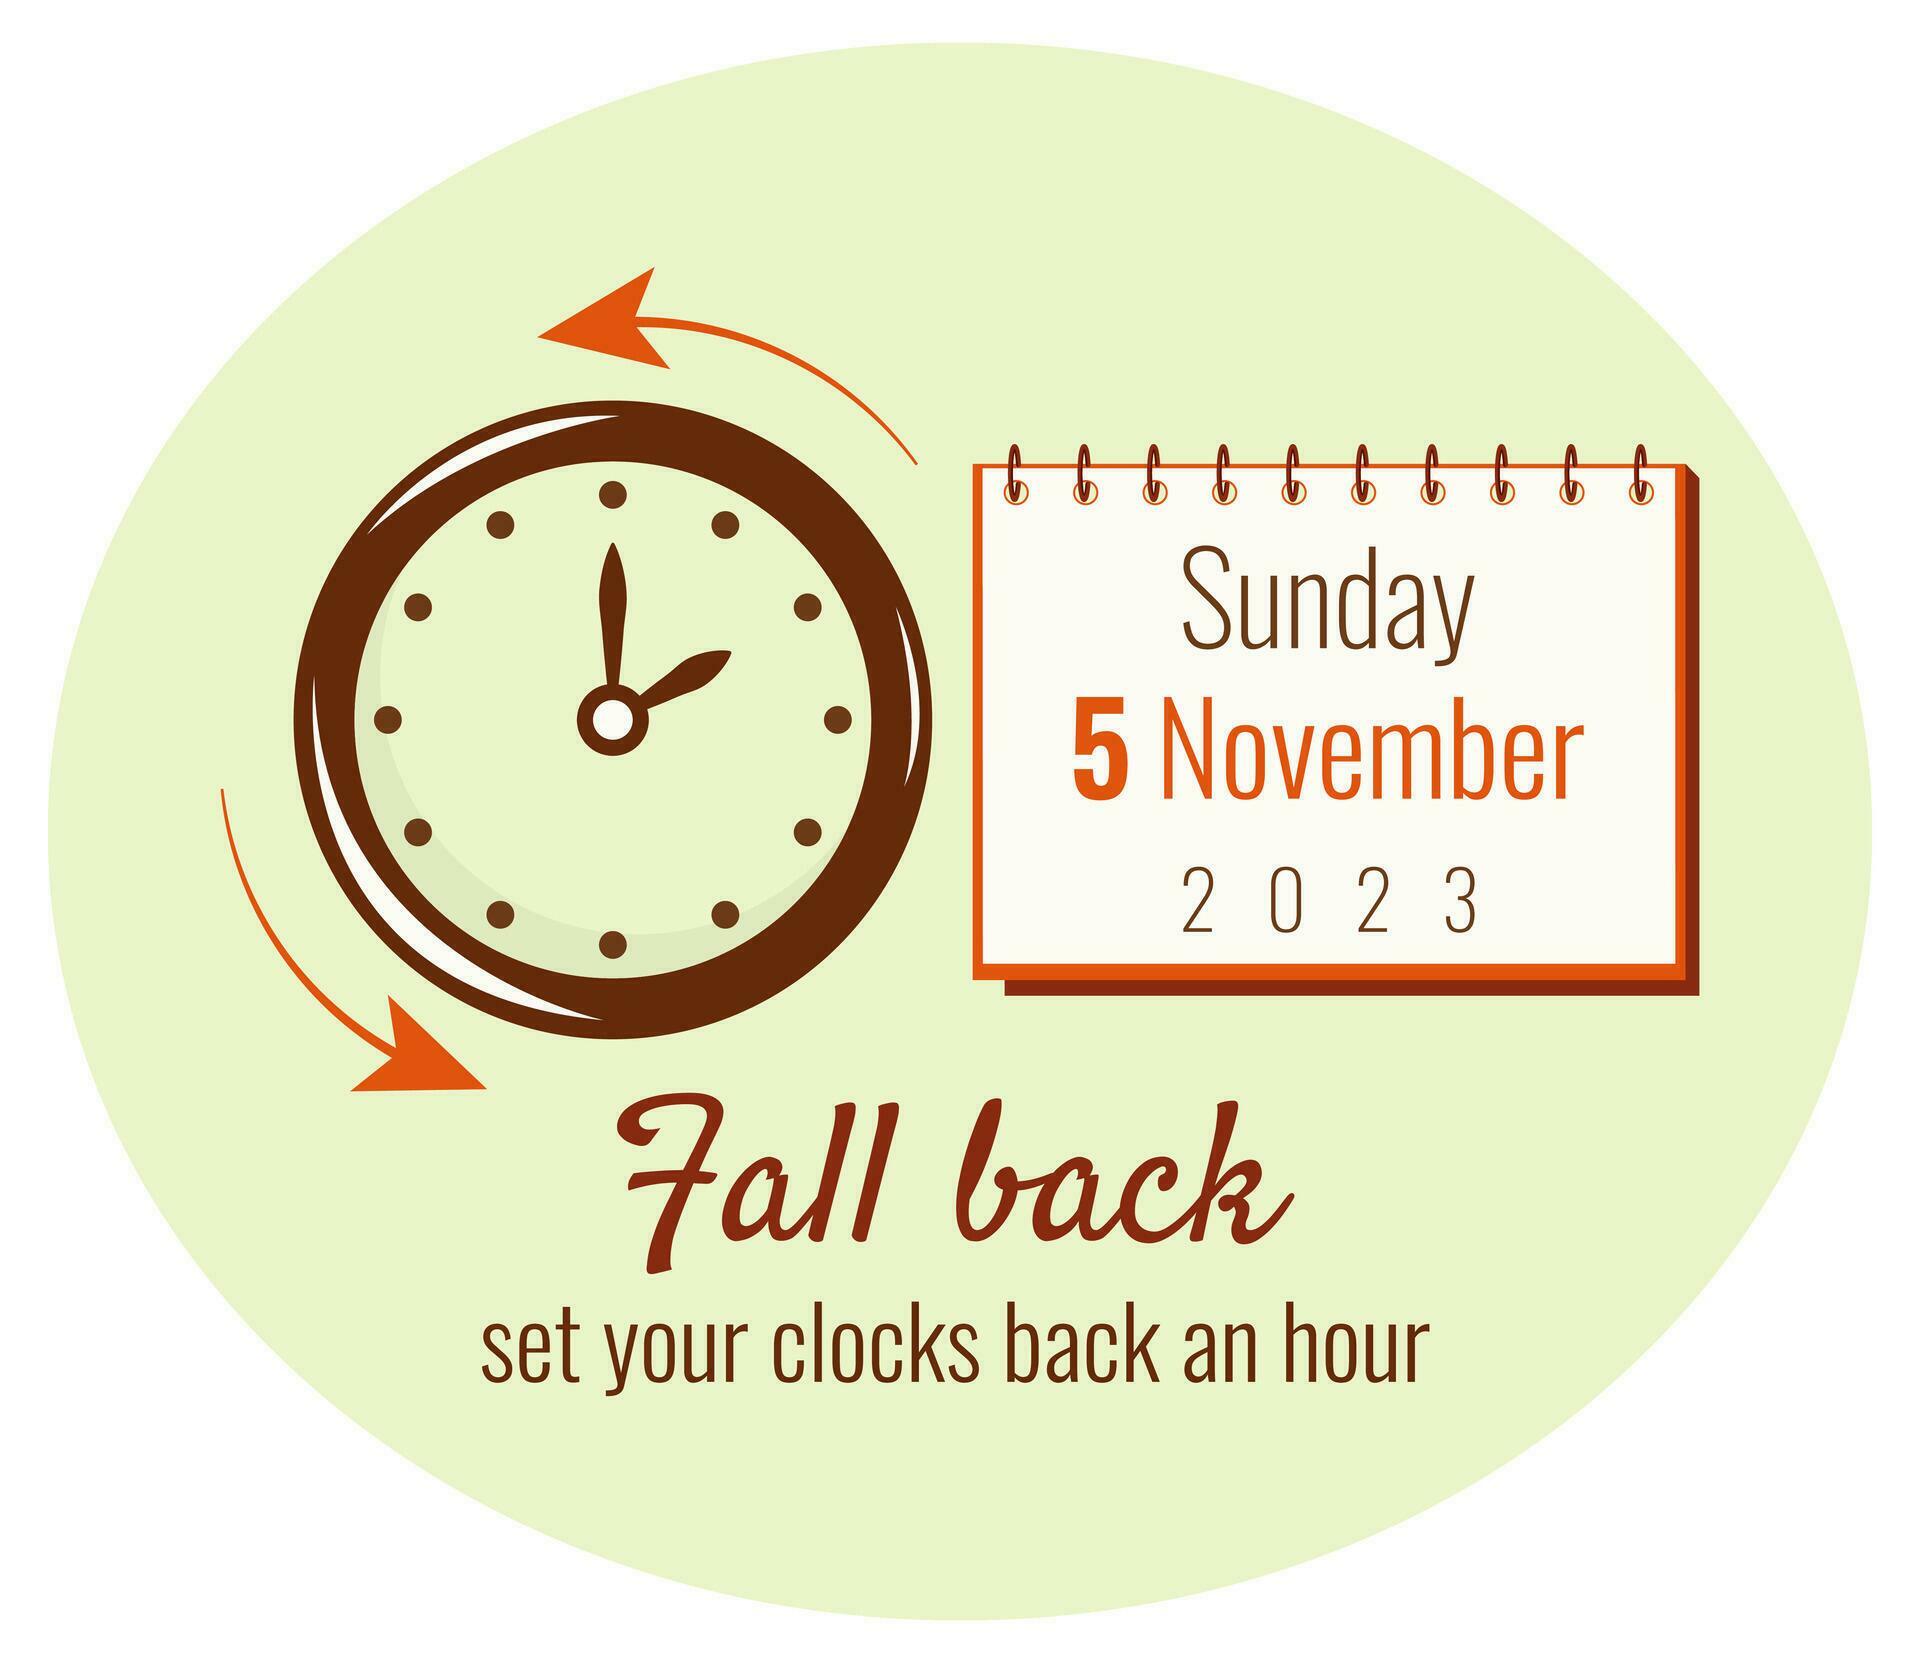 Daylight saving time ends. Fall back change clocks. Vector illustration